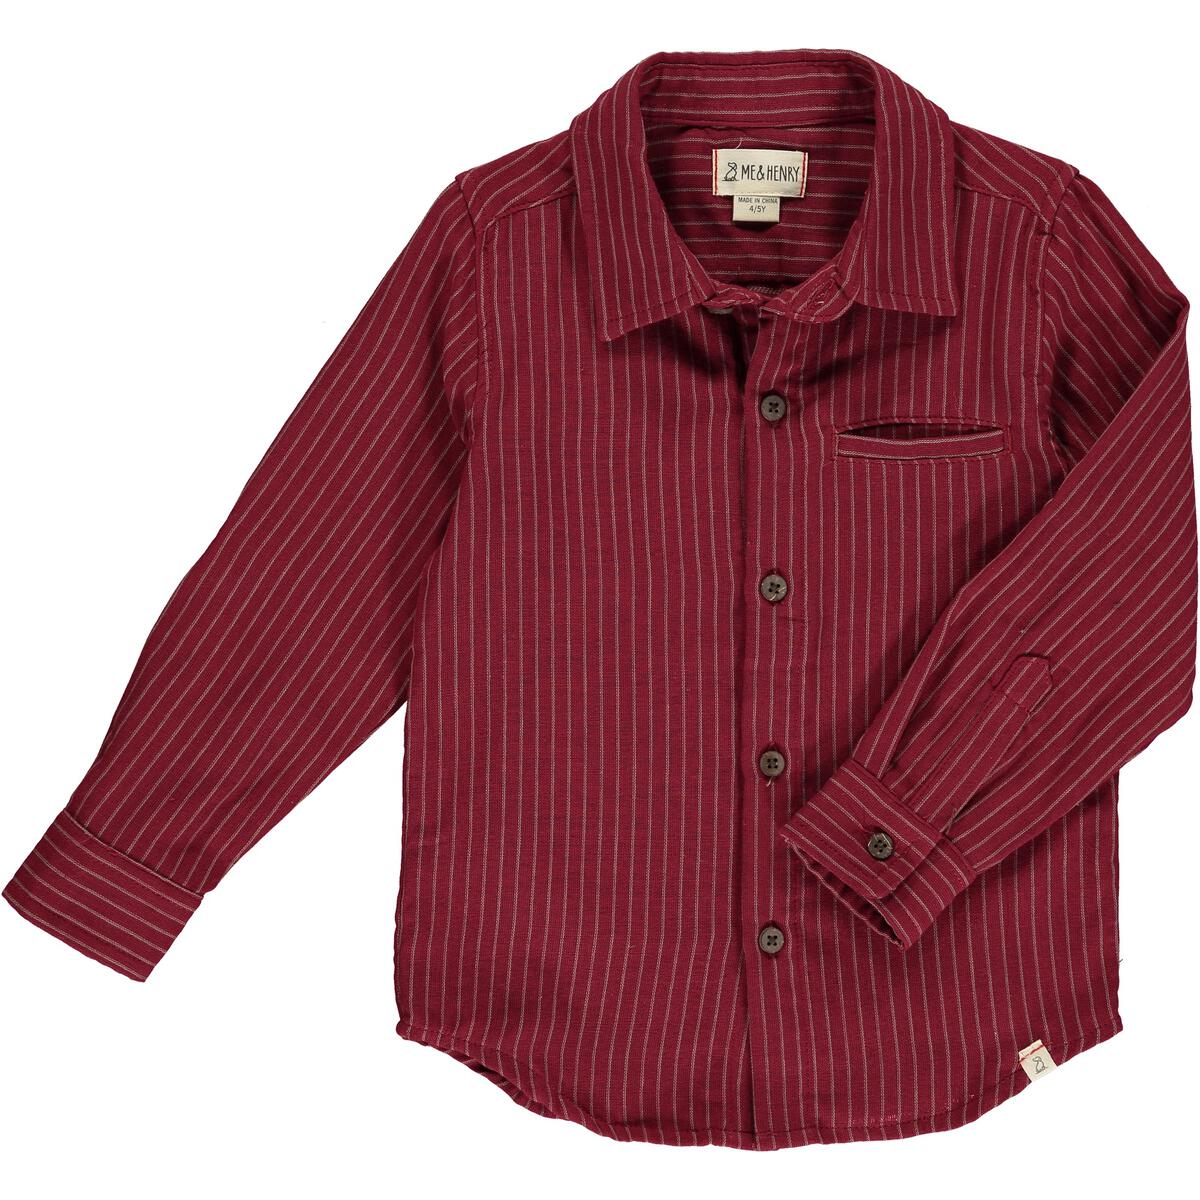 Atwood Woven shirt- Burgundy Stripe (FINAL SALE)